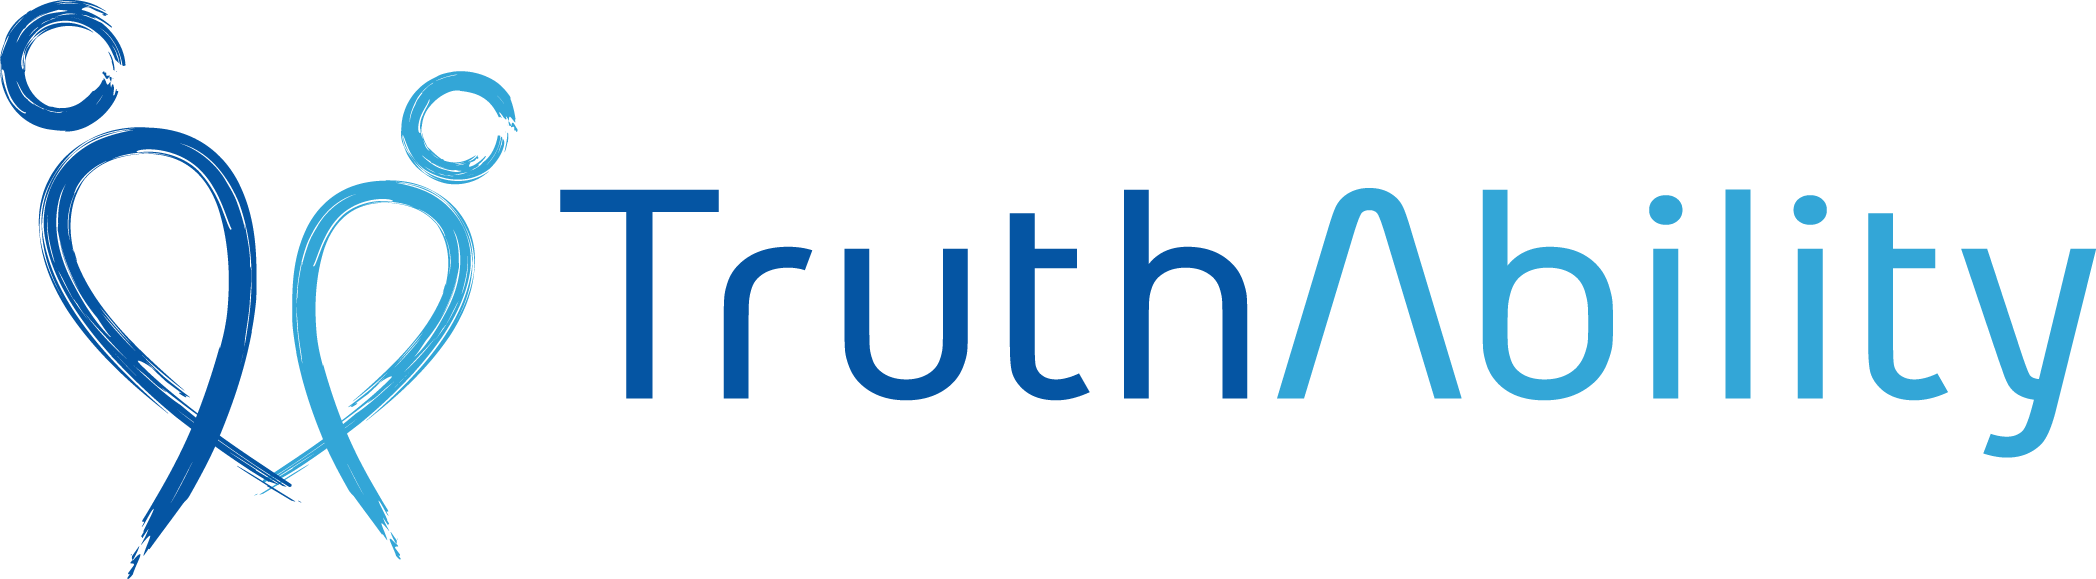 Truthability logo